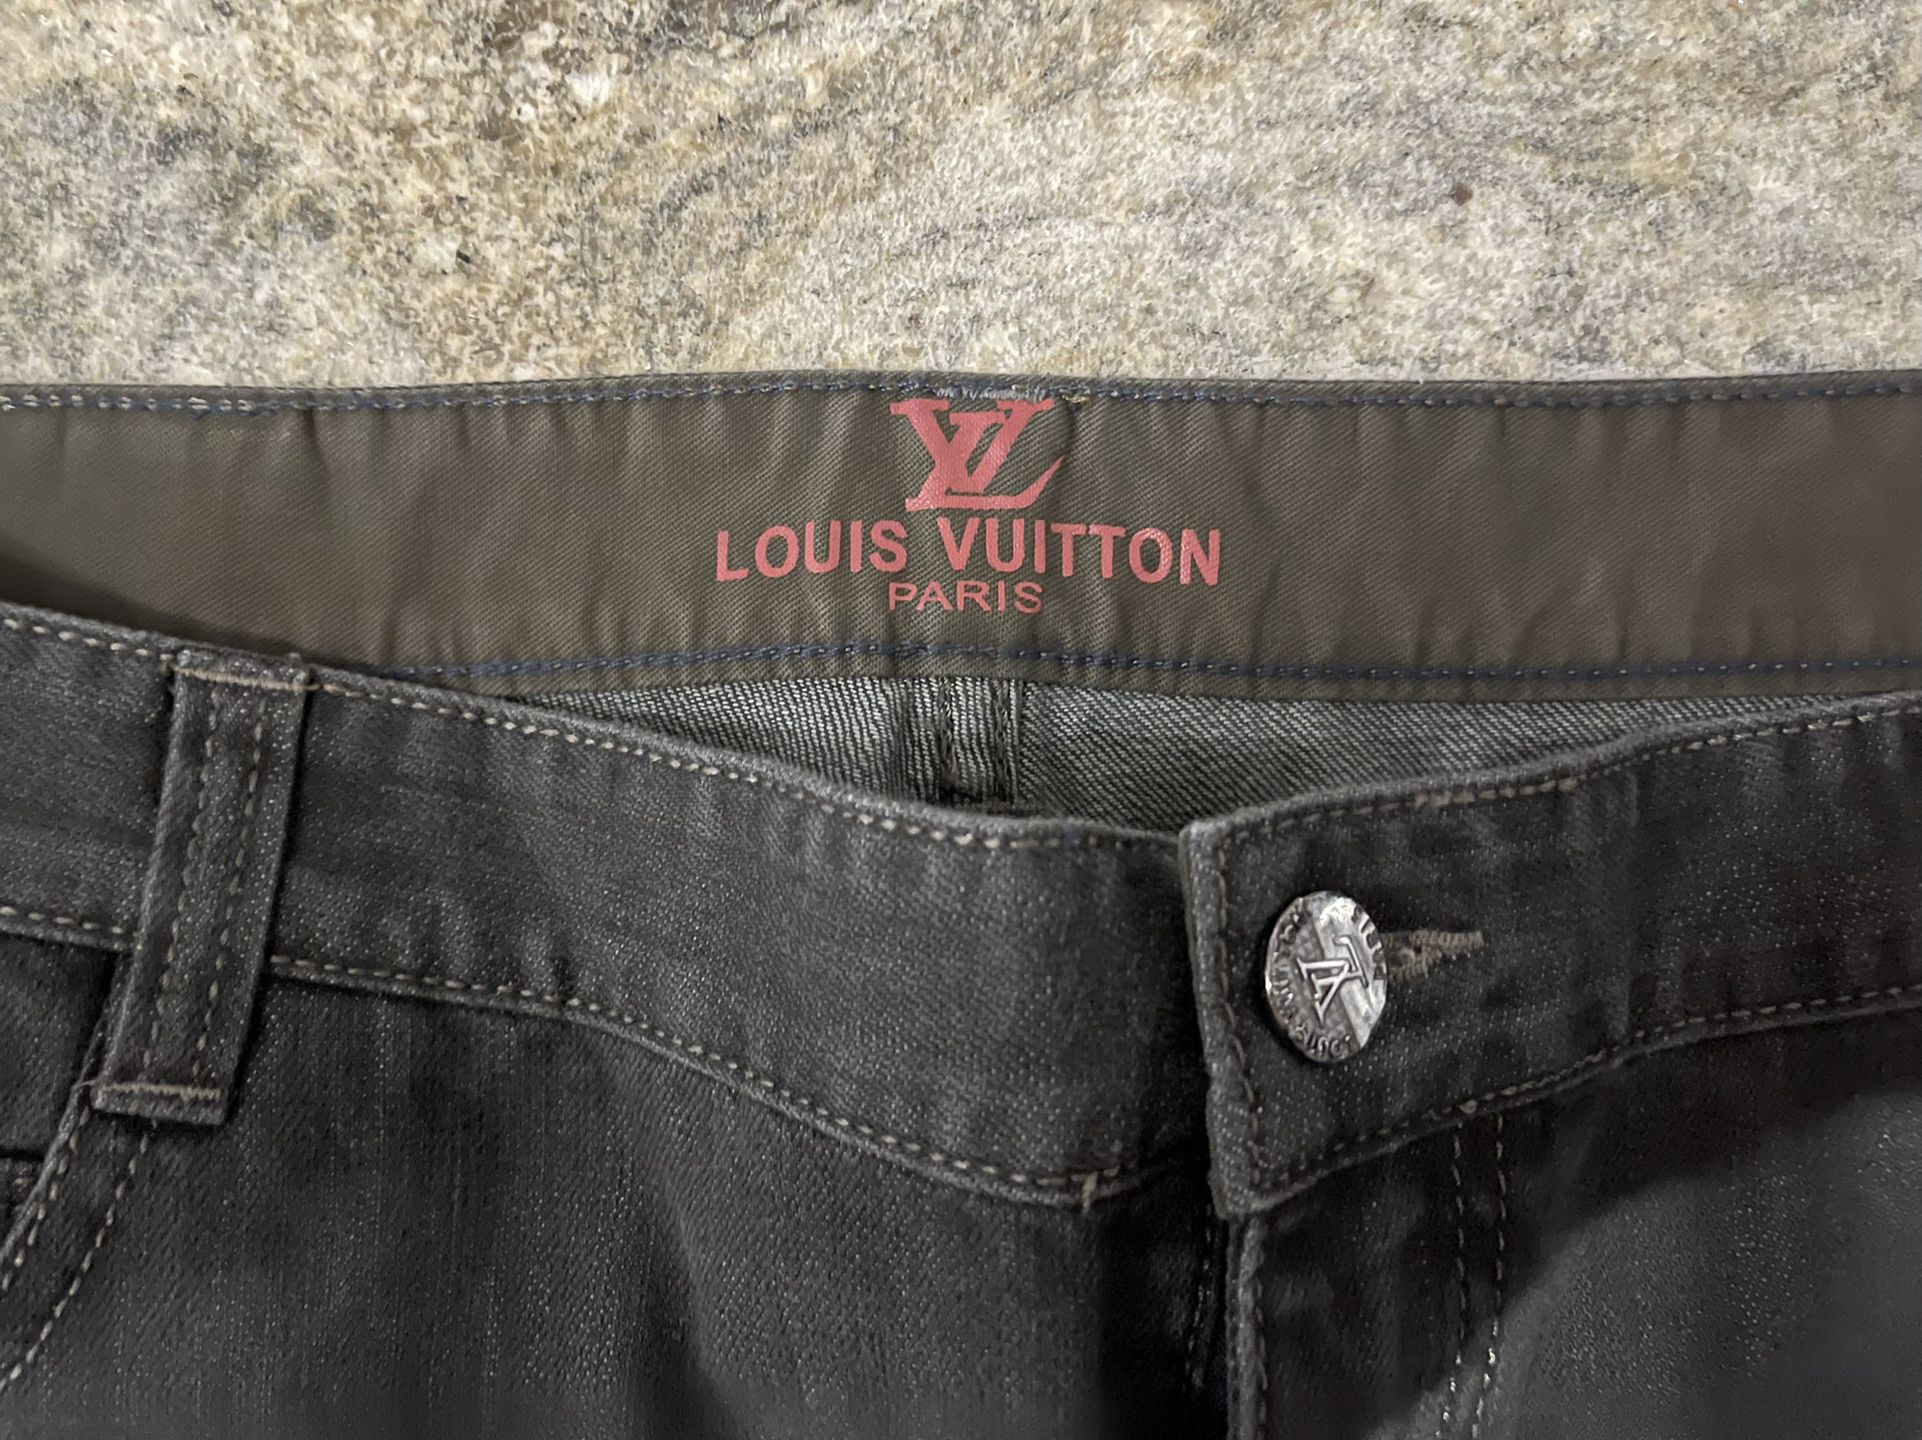 Louis Vuitton Denim Hat for Sale in Las Vegas, NV - OfferUp